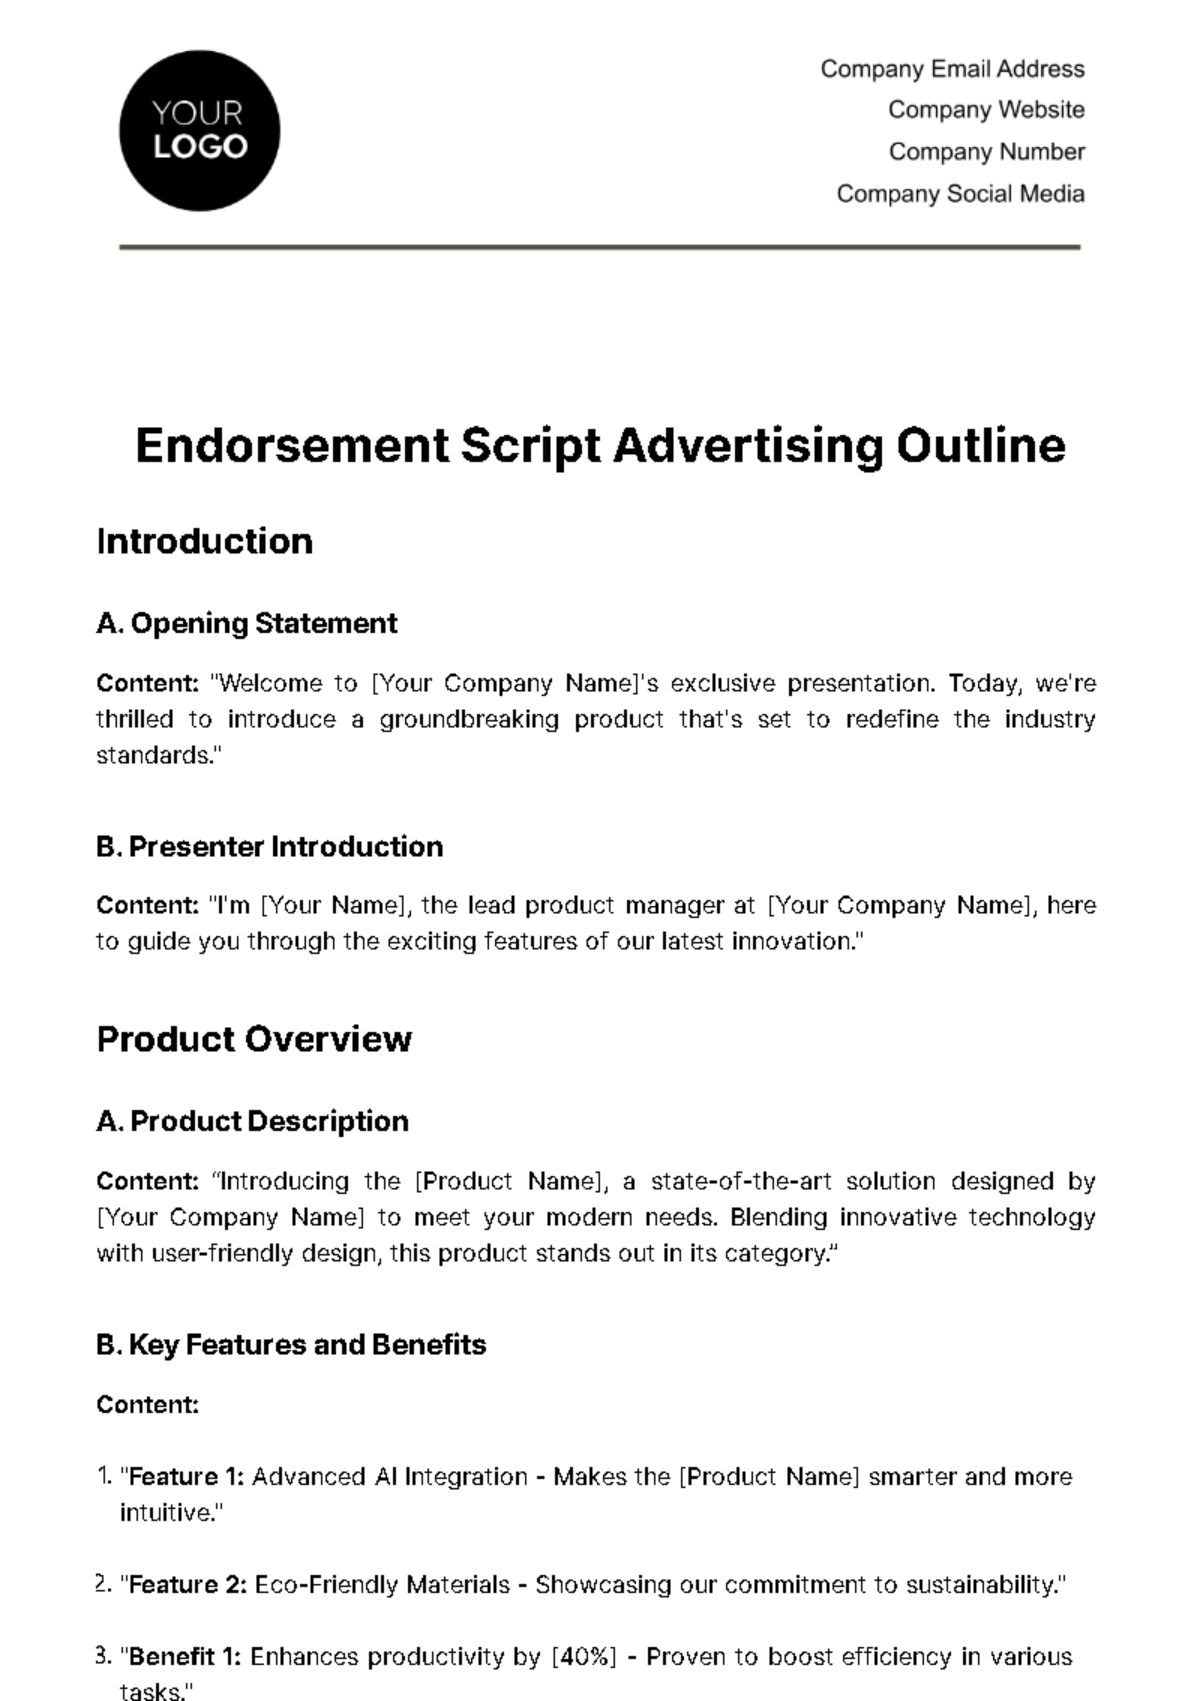 Endorsement Script Advertising Outline Template